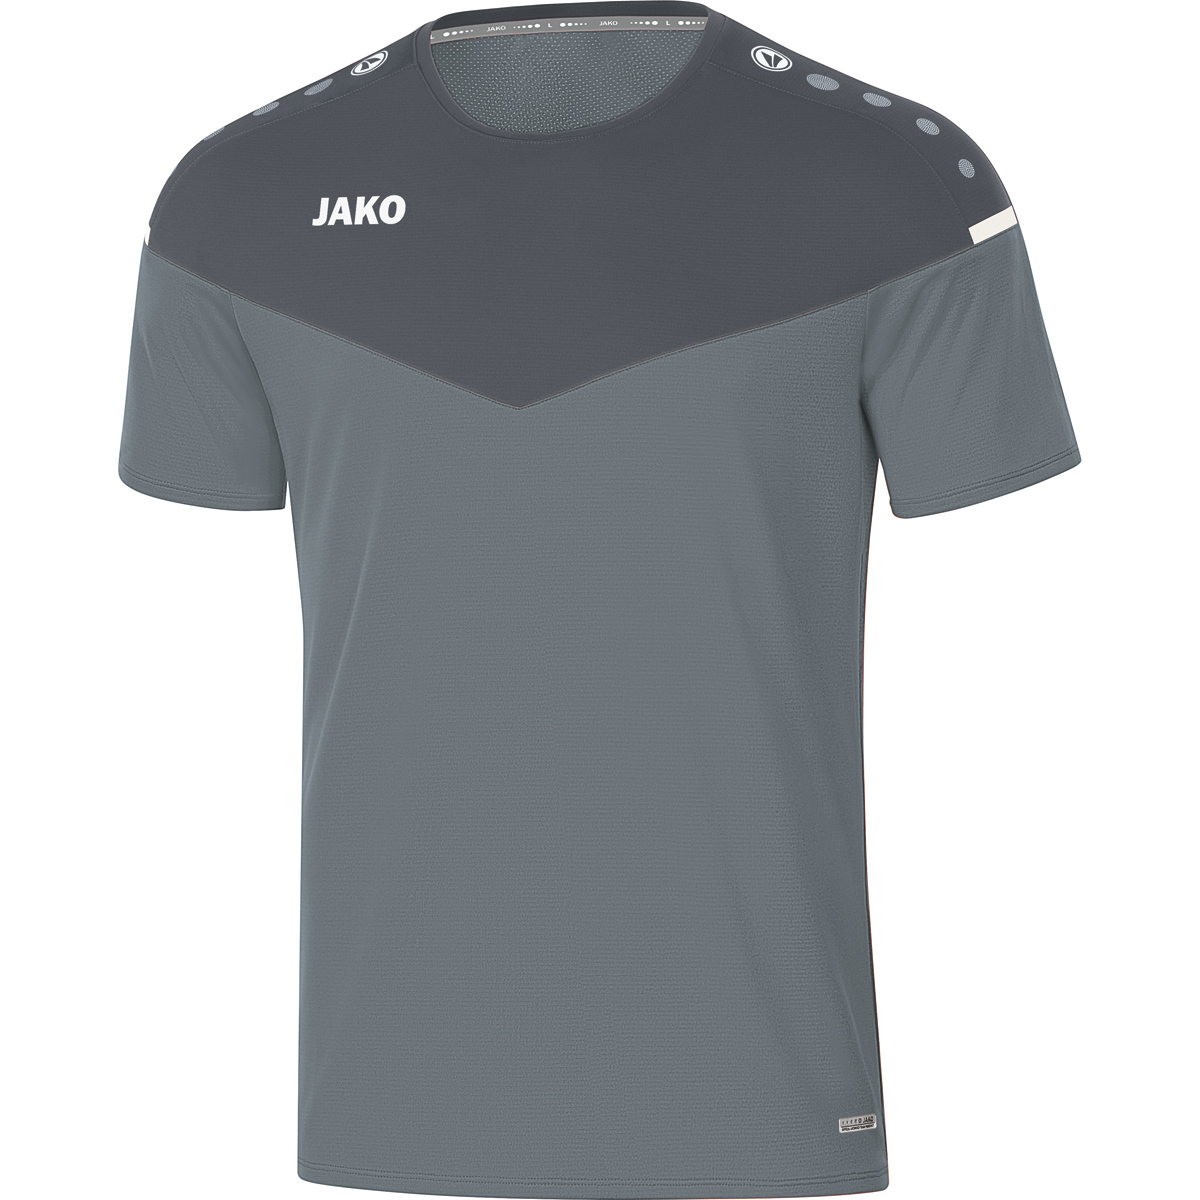 3XL, JAKO light, steingrau/anthra T-Shirt 2.0 Champ Herren, Gr. 6120